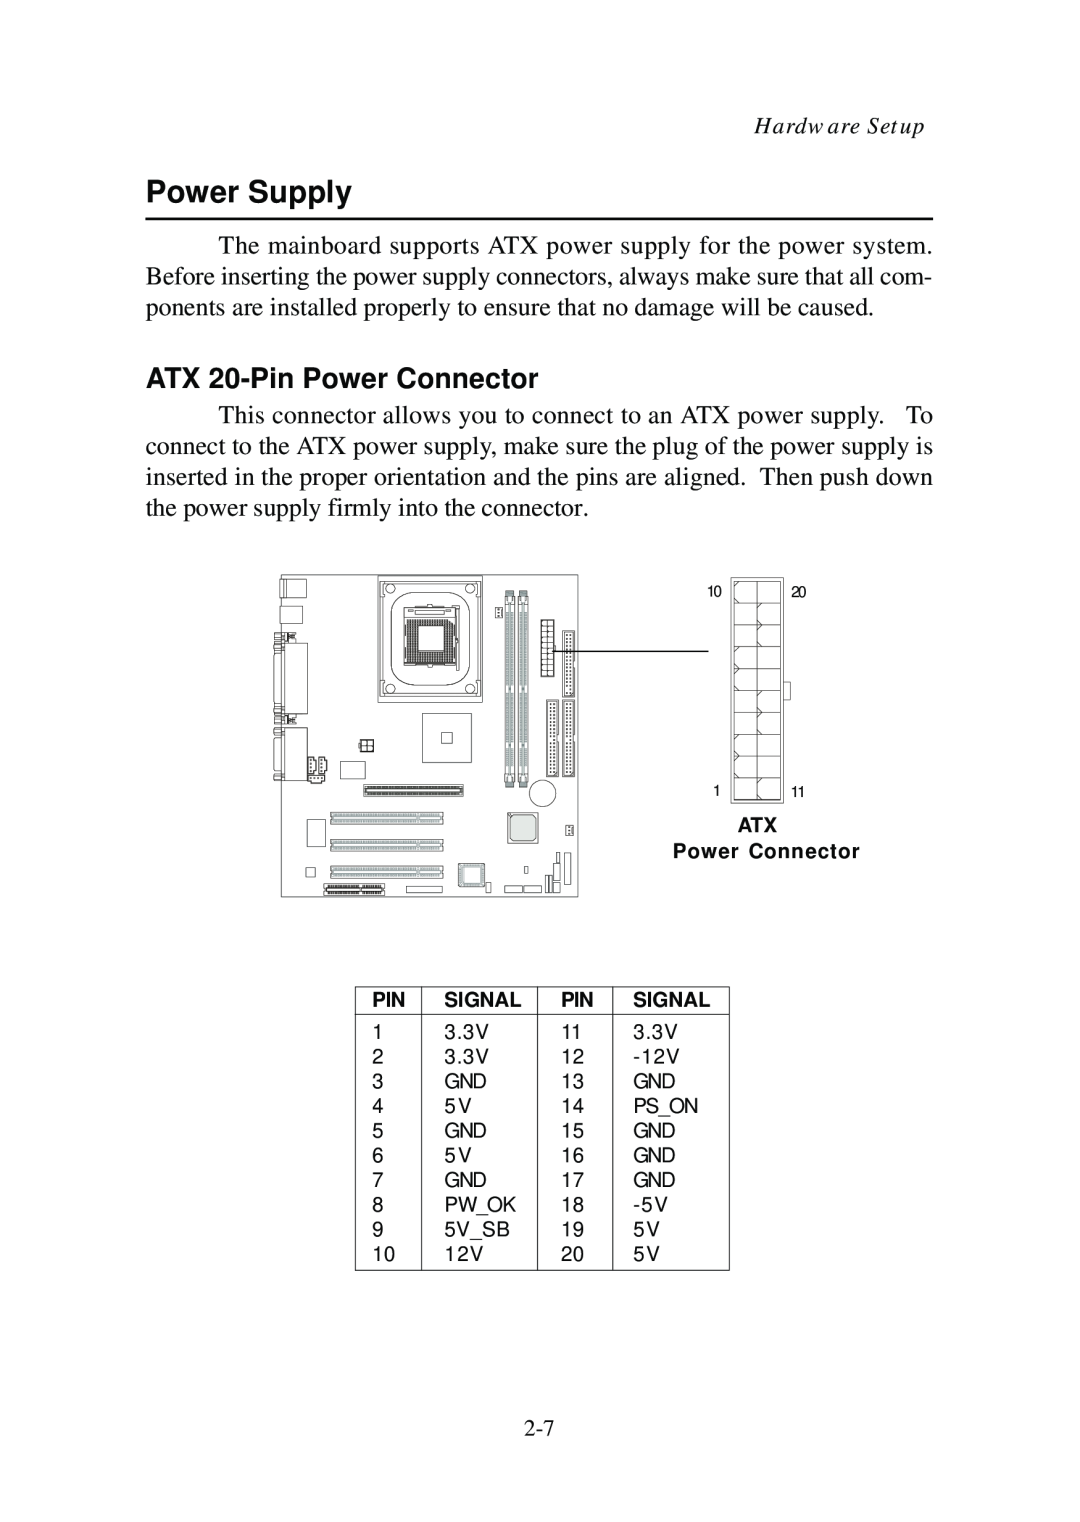 Premio Computer Aries/Centella manual Power Supply, ATX 20-Pin Power Connector 